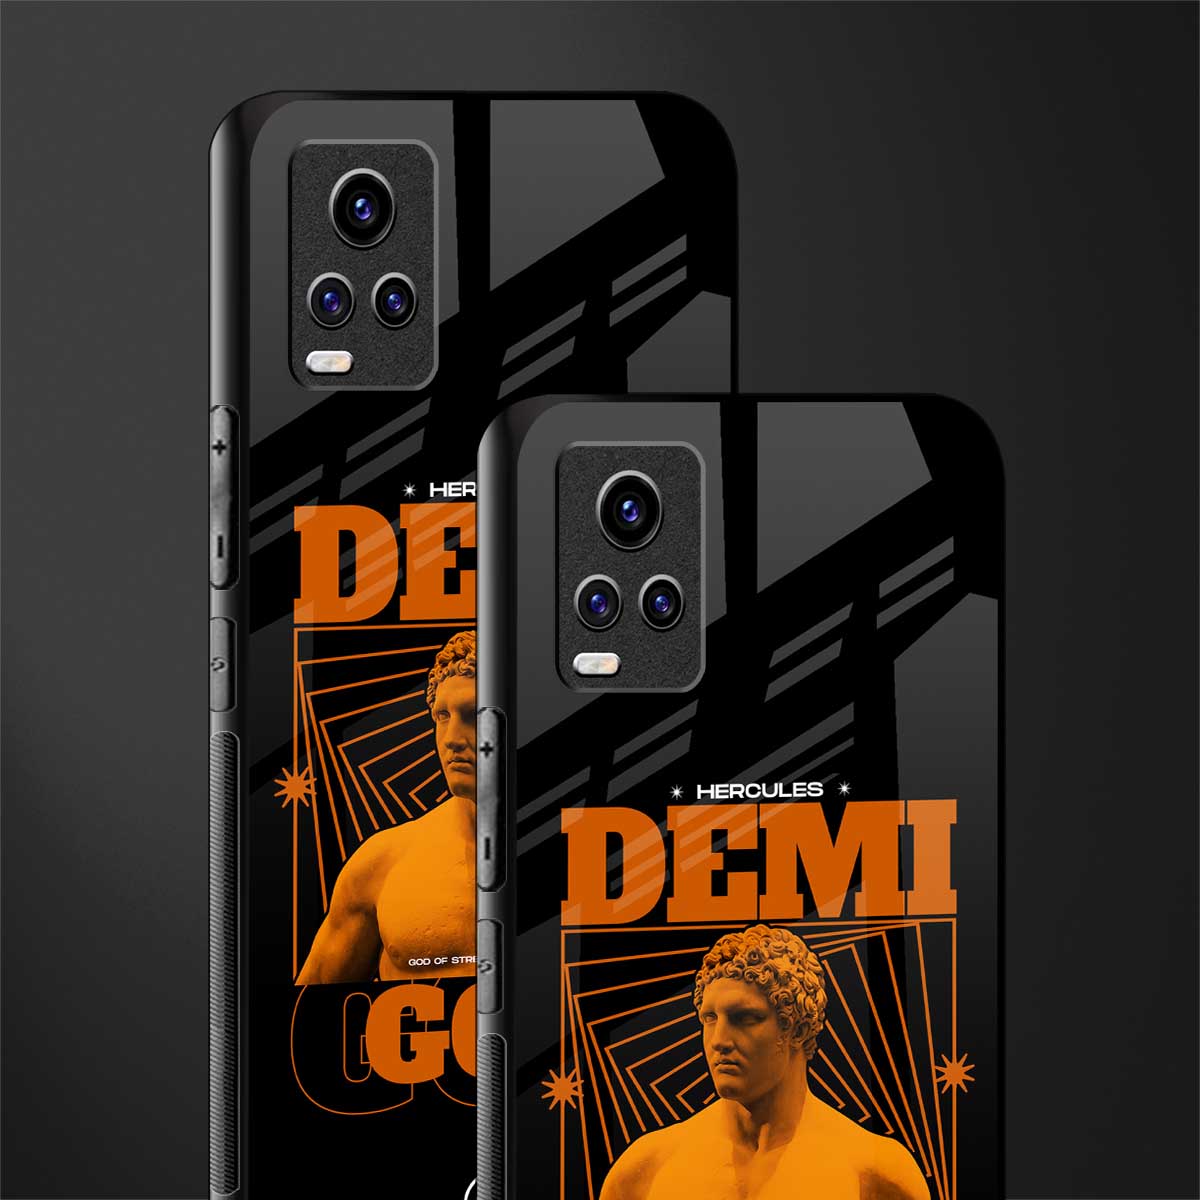 demi god back phone cover | glass case for vivo y73